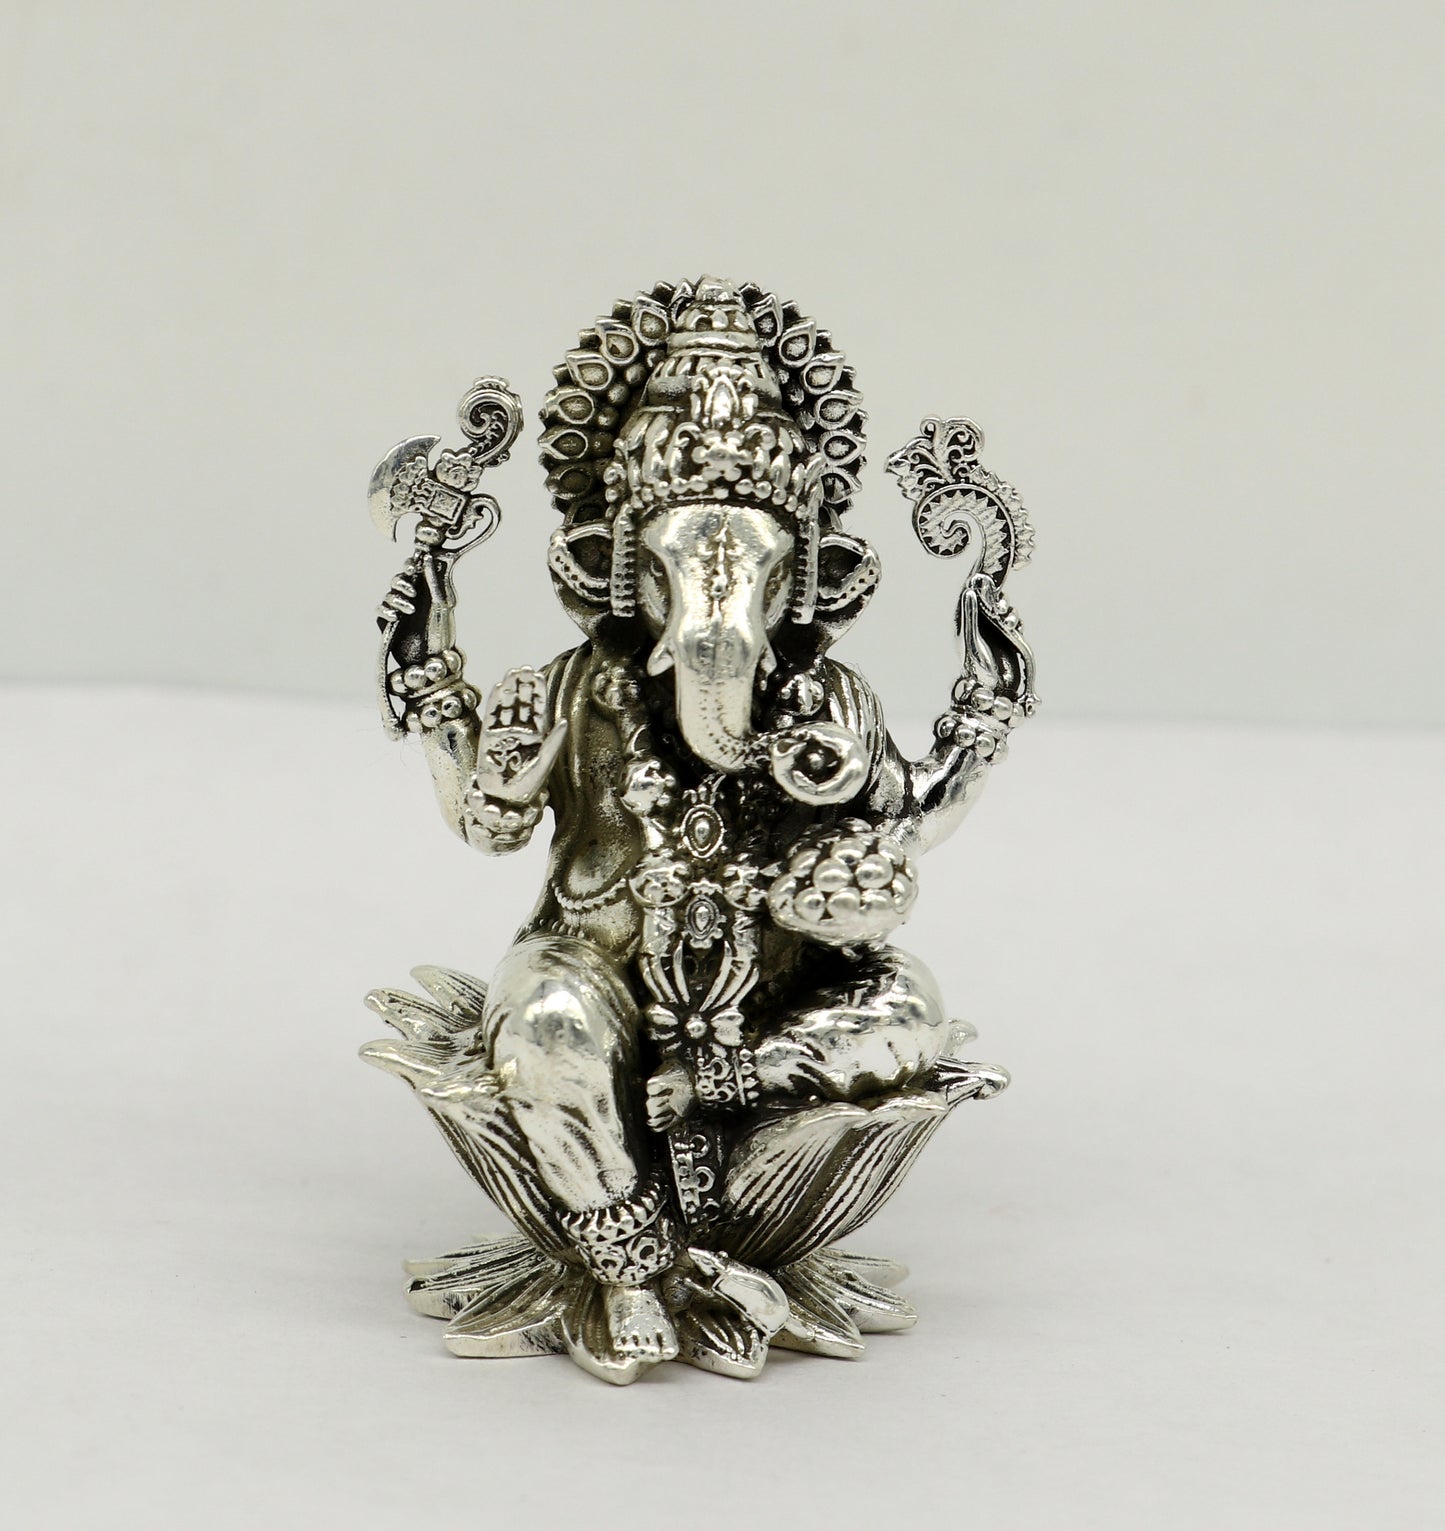 2" small 925 Sterling silver handmade customized Hindu God Idol Ganesha statue, puja article figurine, home decor utensils art31 - TRIBAL ORNAMENTS